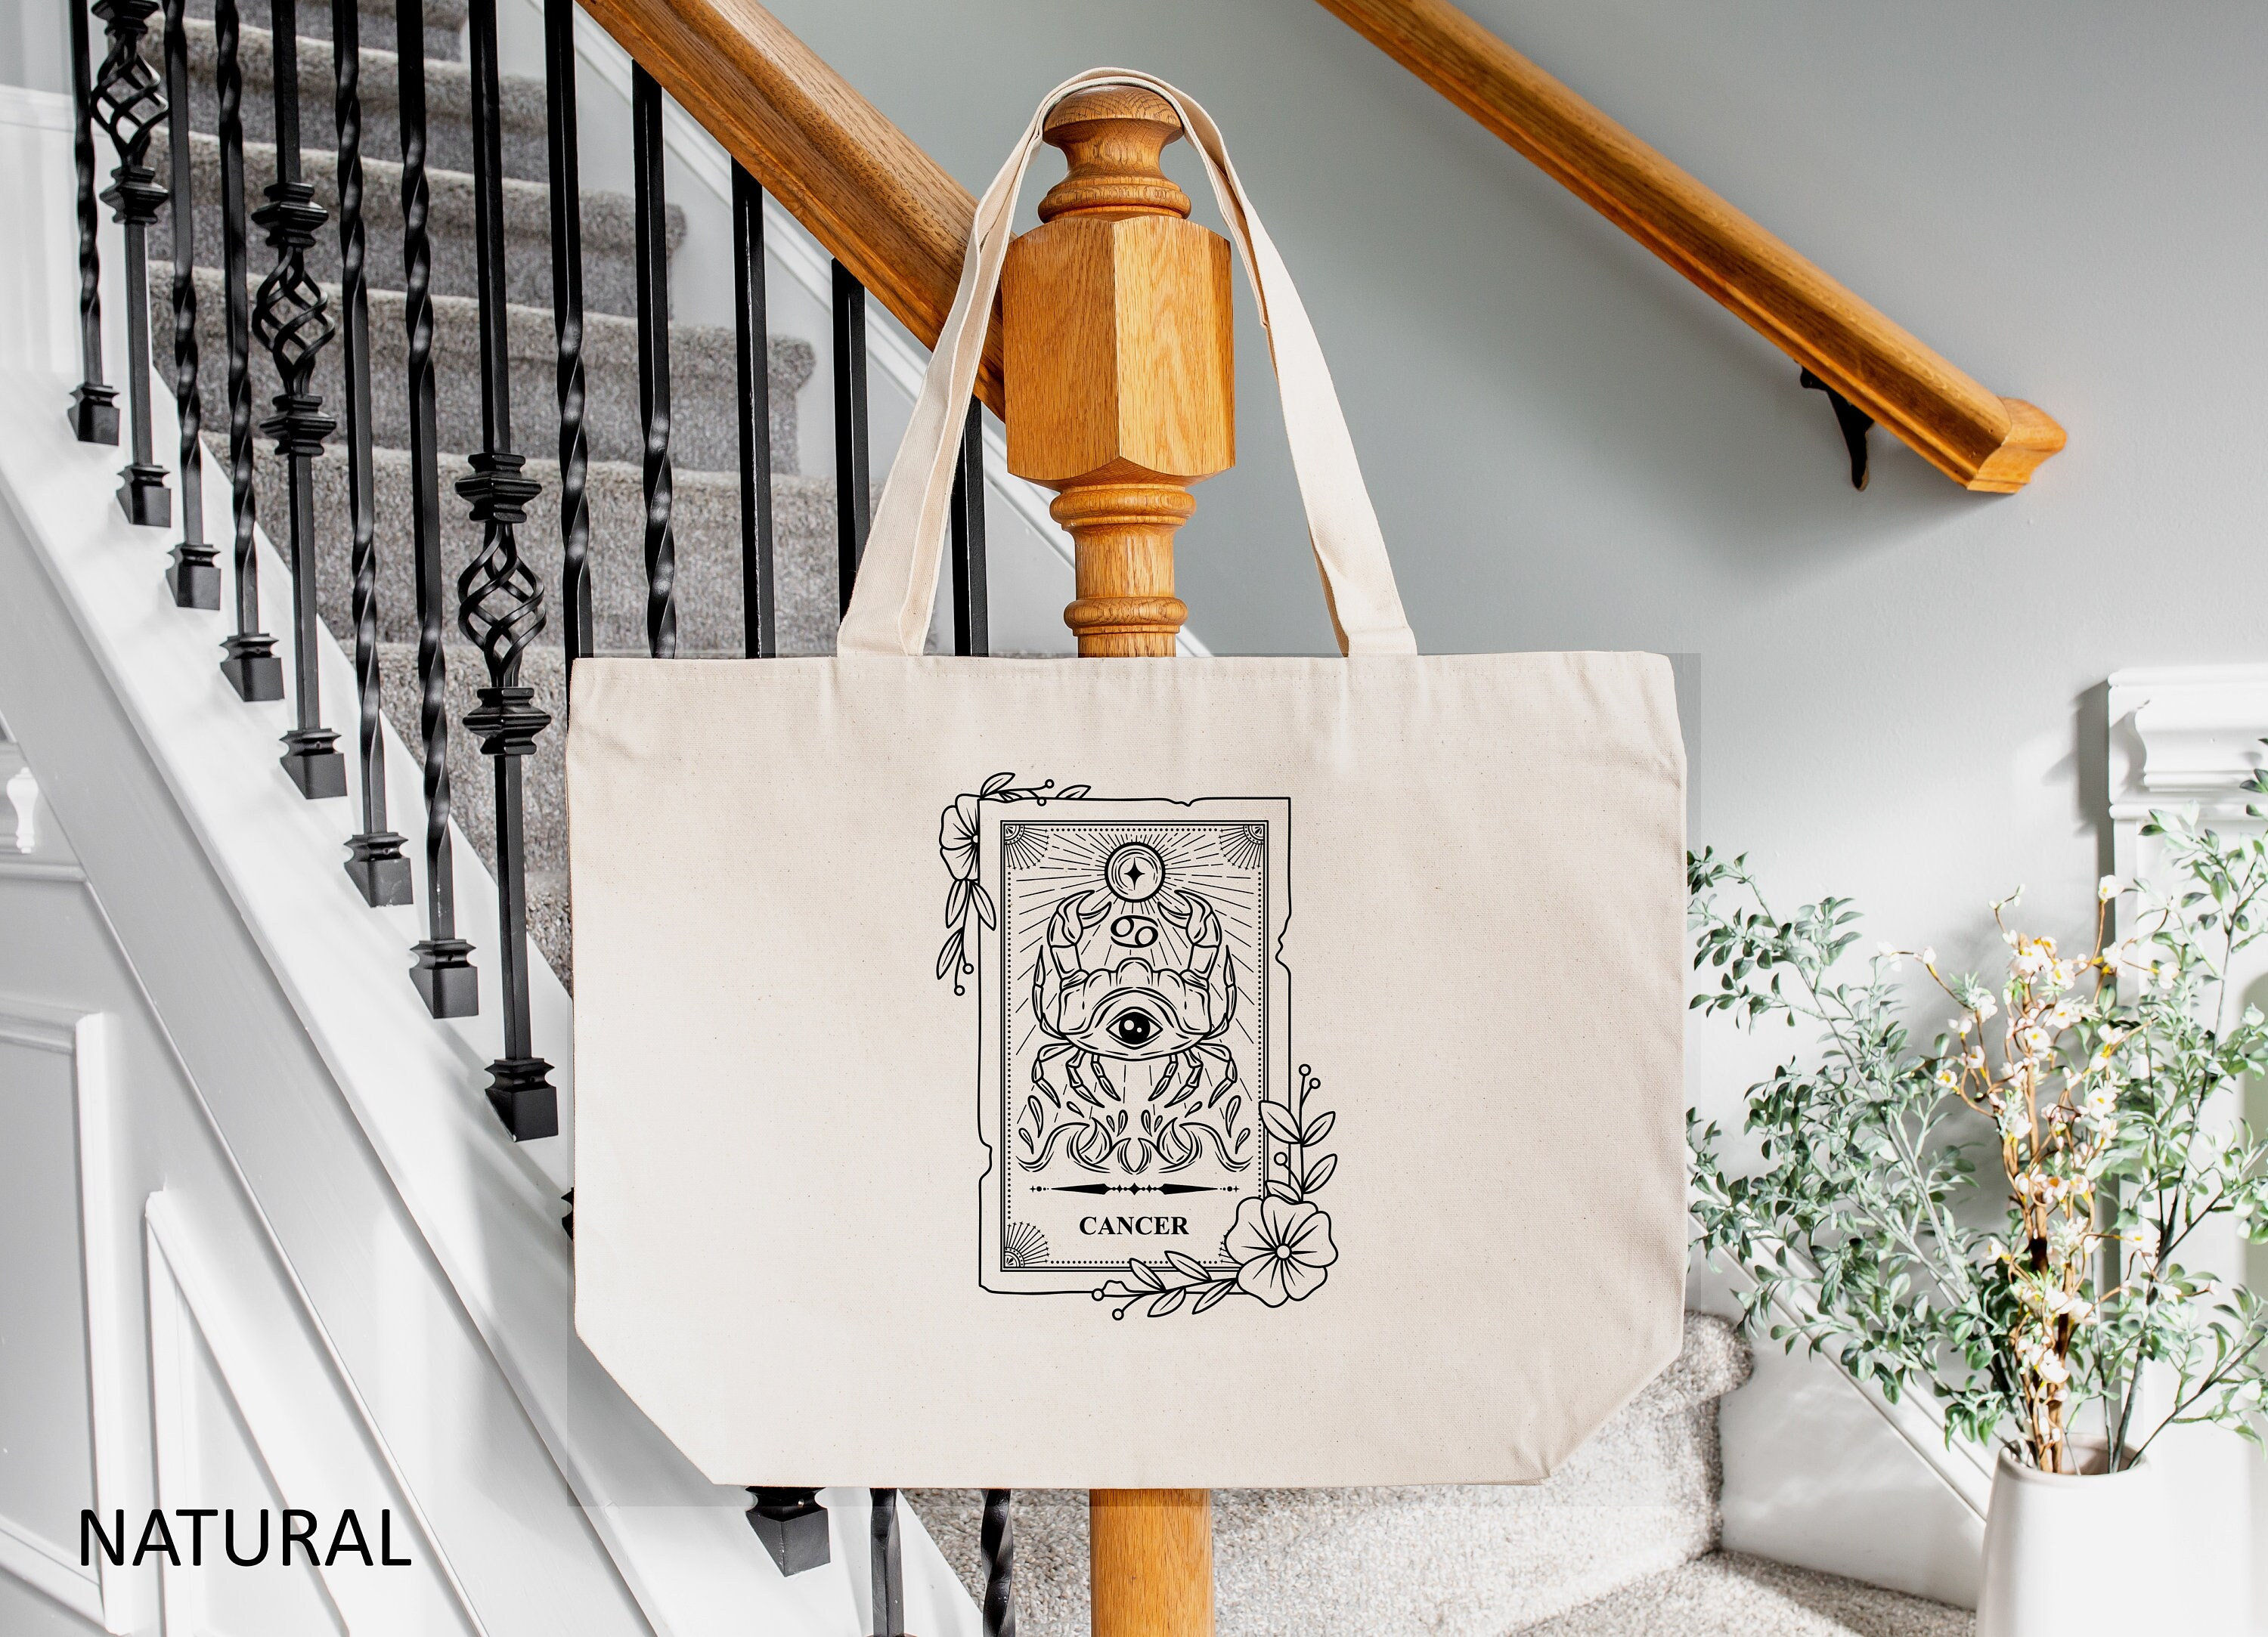 HATIART Canvas Tote Bag Astrological Girl Symbolizes the Zodiac Sign Libra Pastel  Goth Reusable Shoulder Grocery Shopping Bags Handbag